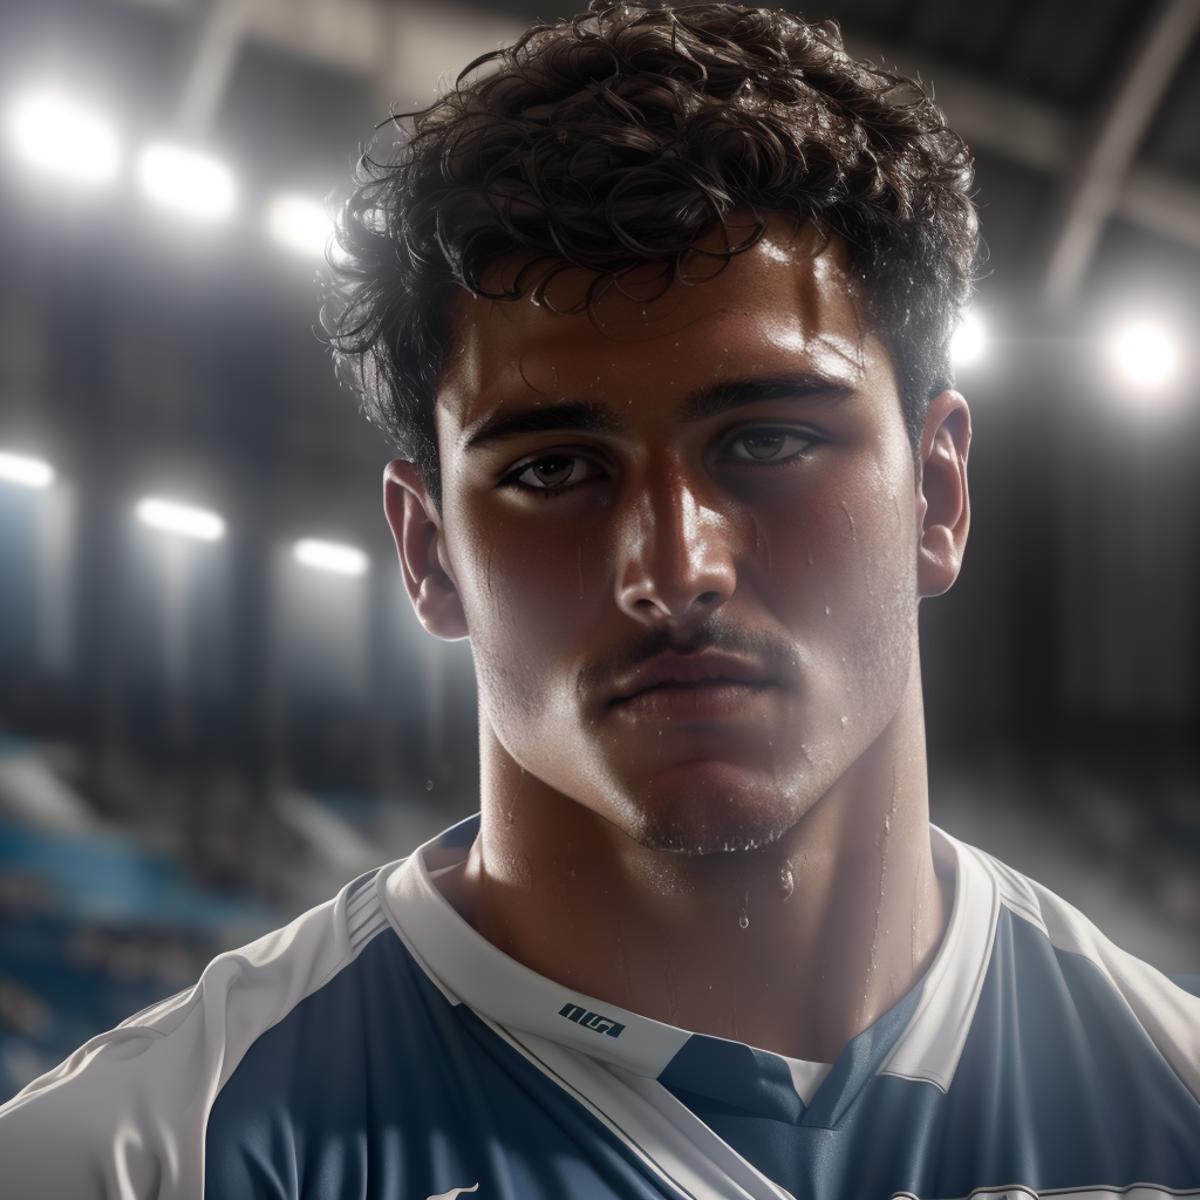 Rodrigo Isgró [Rugby Player] image by rett23